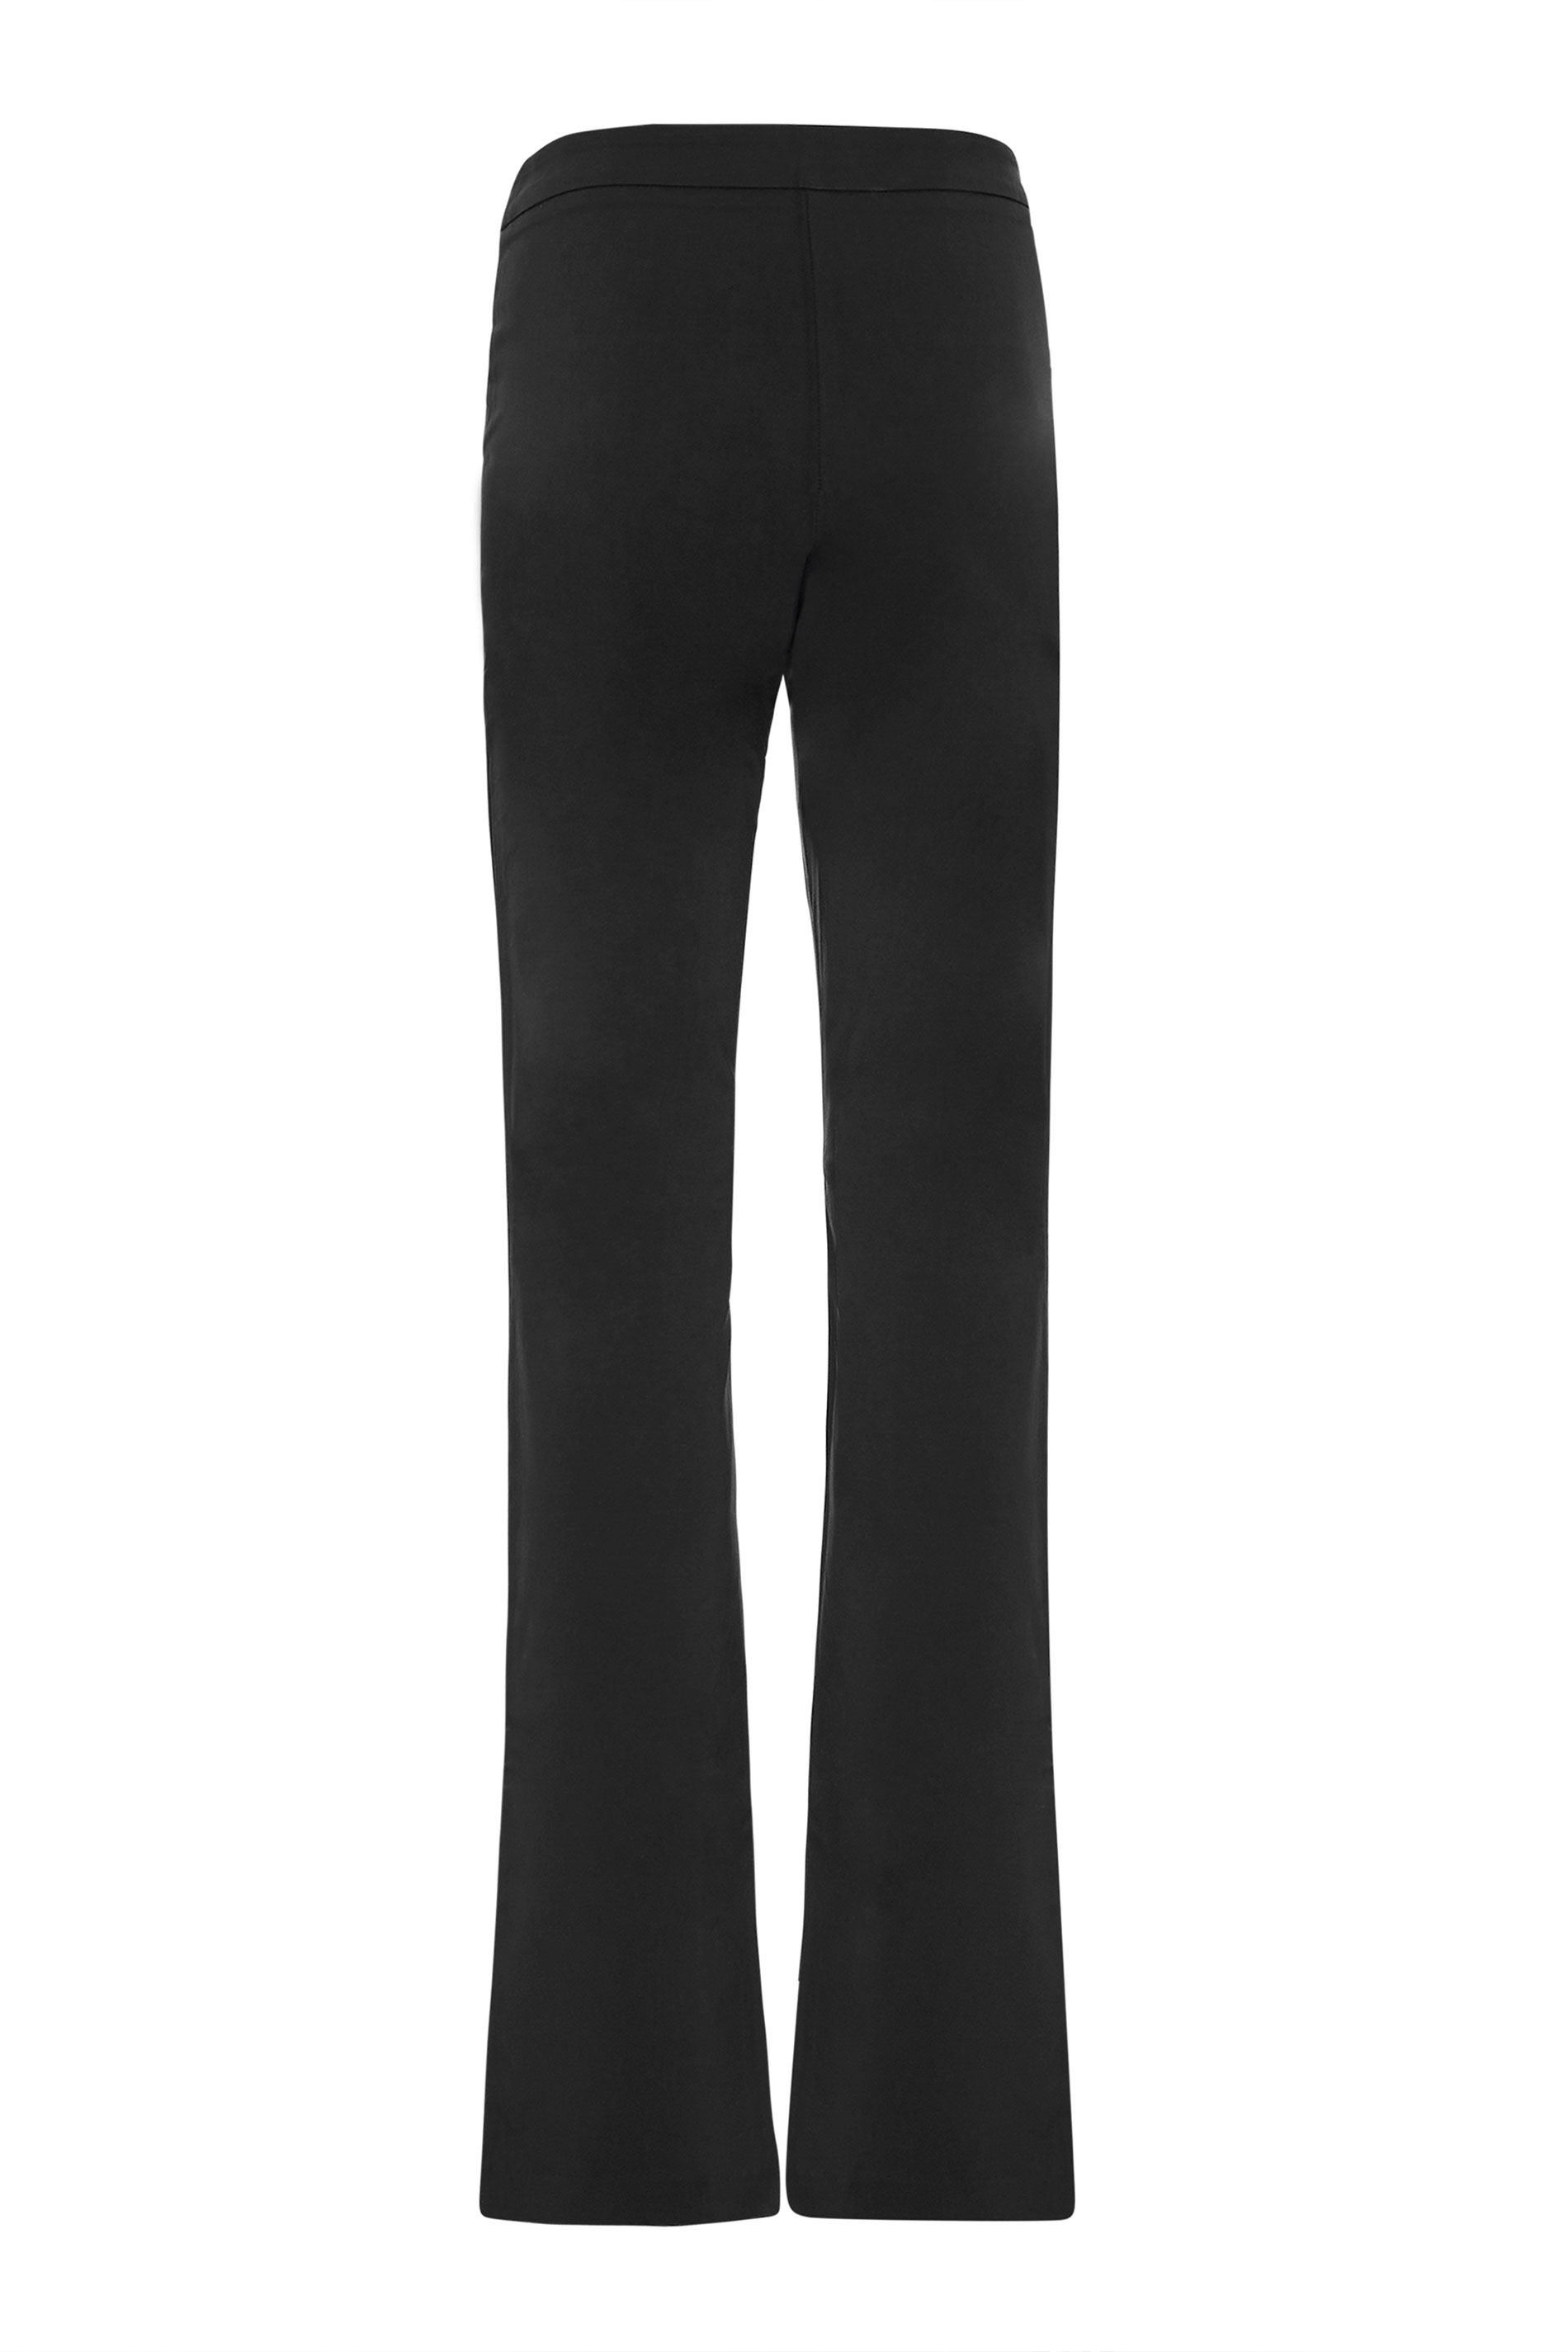 LTS Tall Women's Black Bootcut Trousers | Long Tall Sally 2